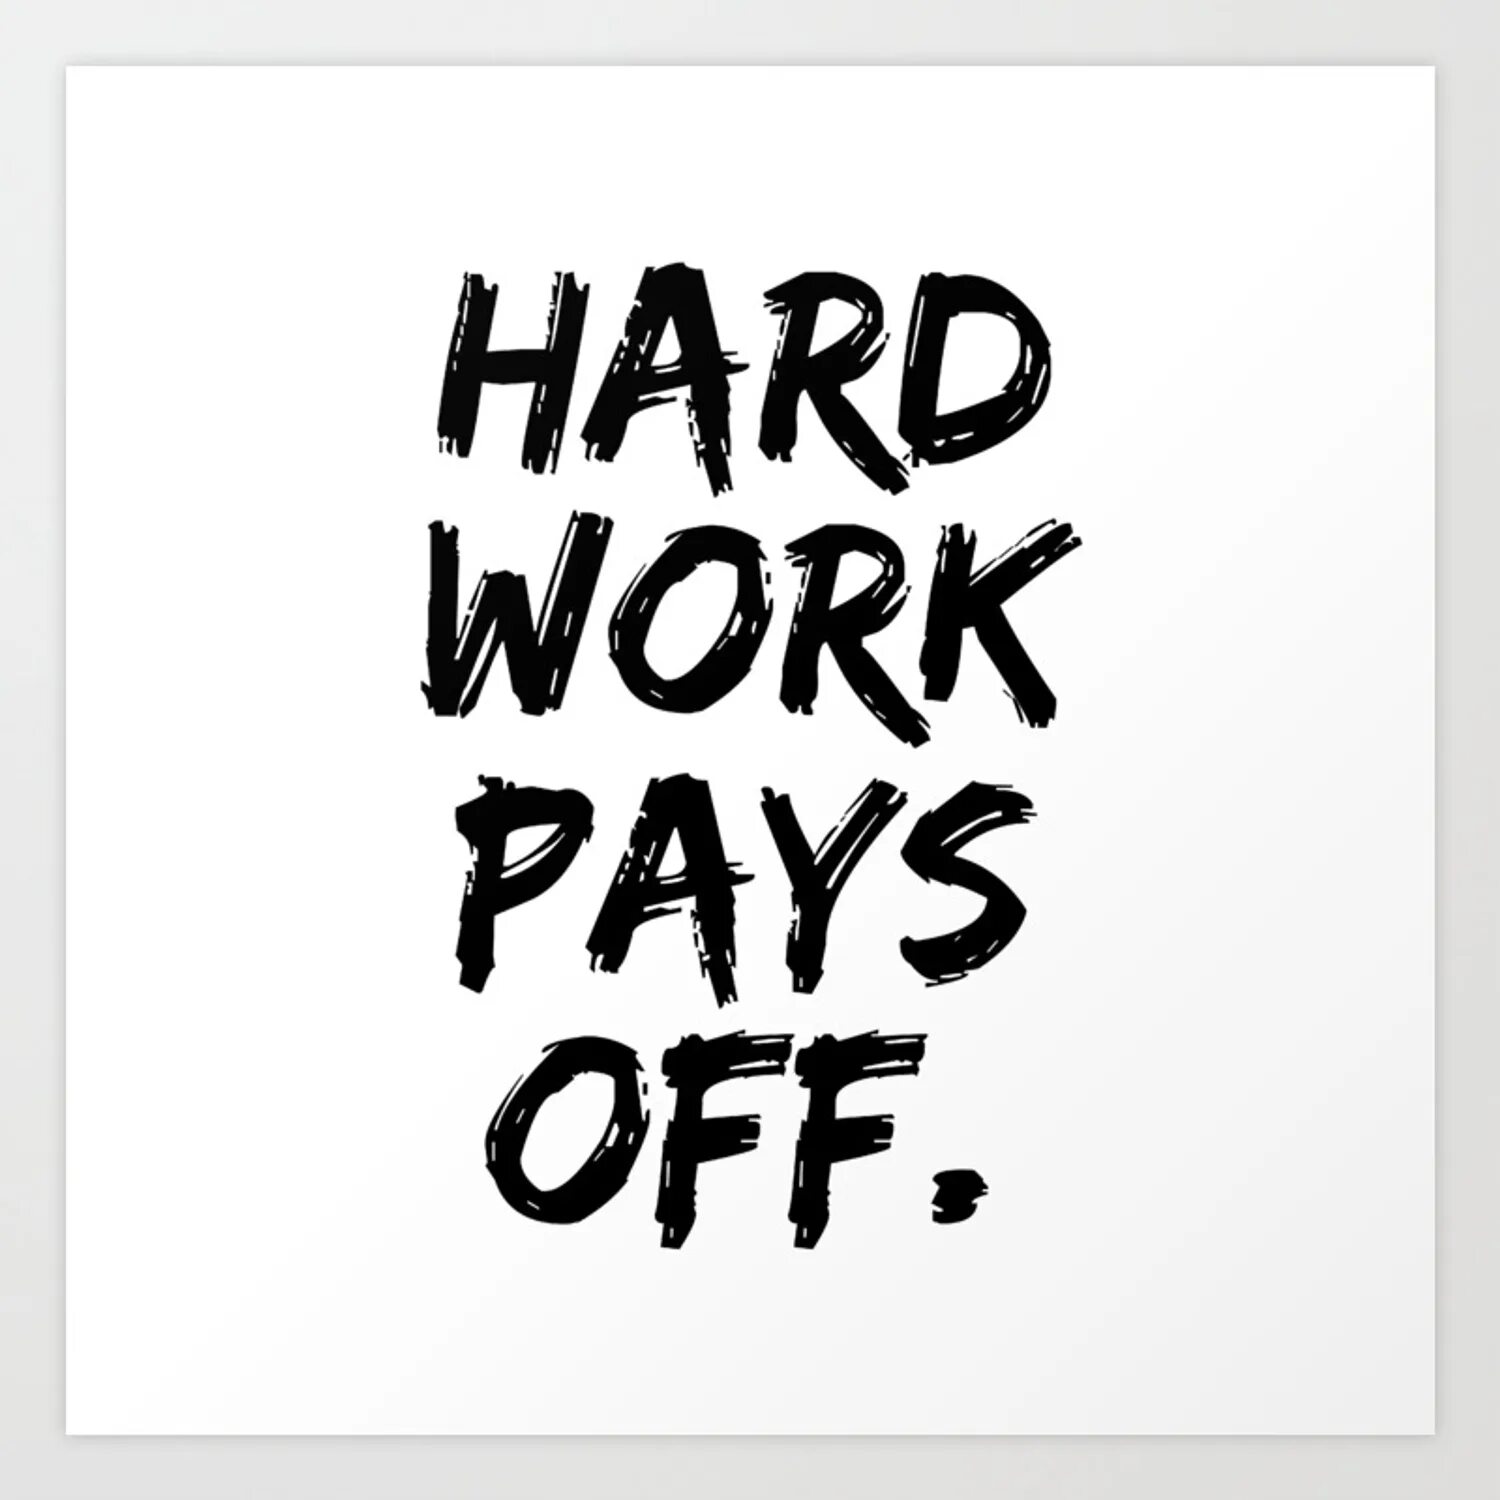 Hard work pays off. Hard work pays off обои. Hard work pays off перевод. Картинка hard work pays off. Off payment